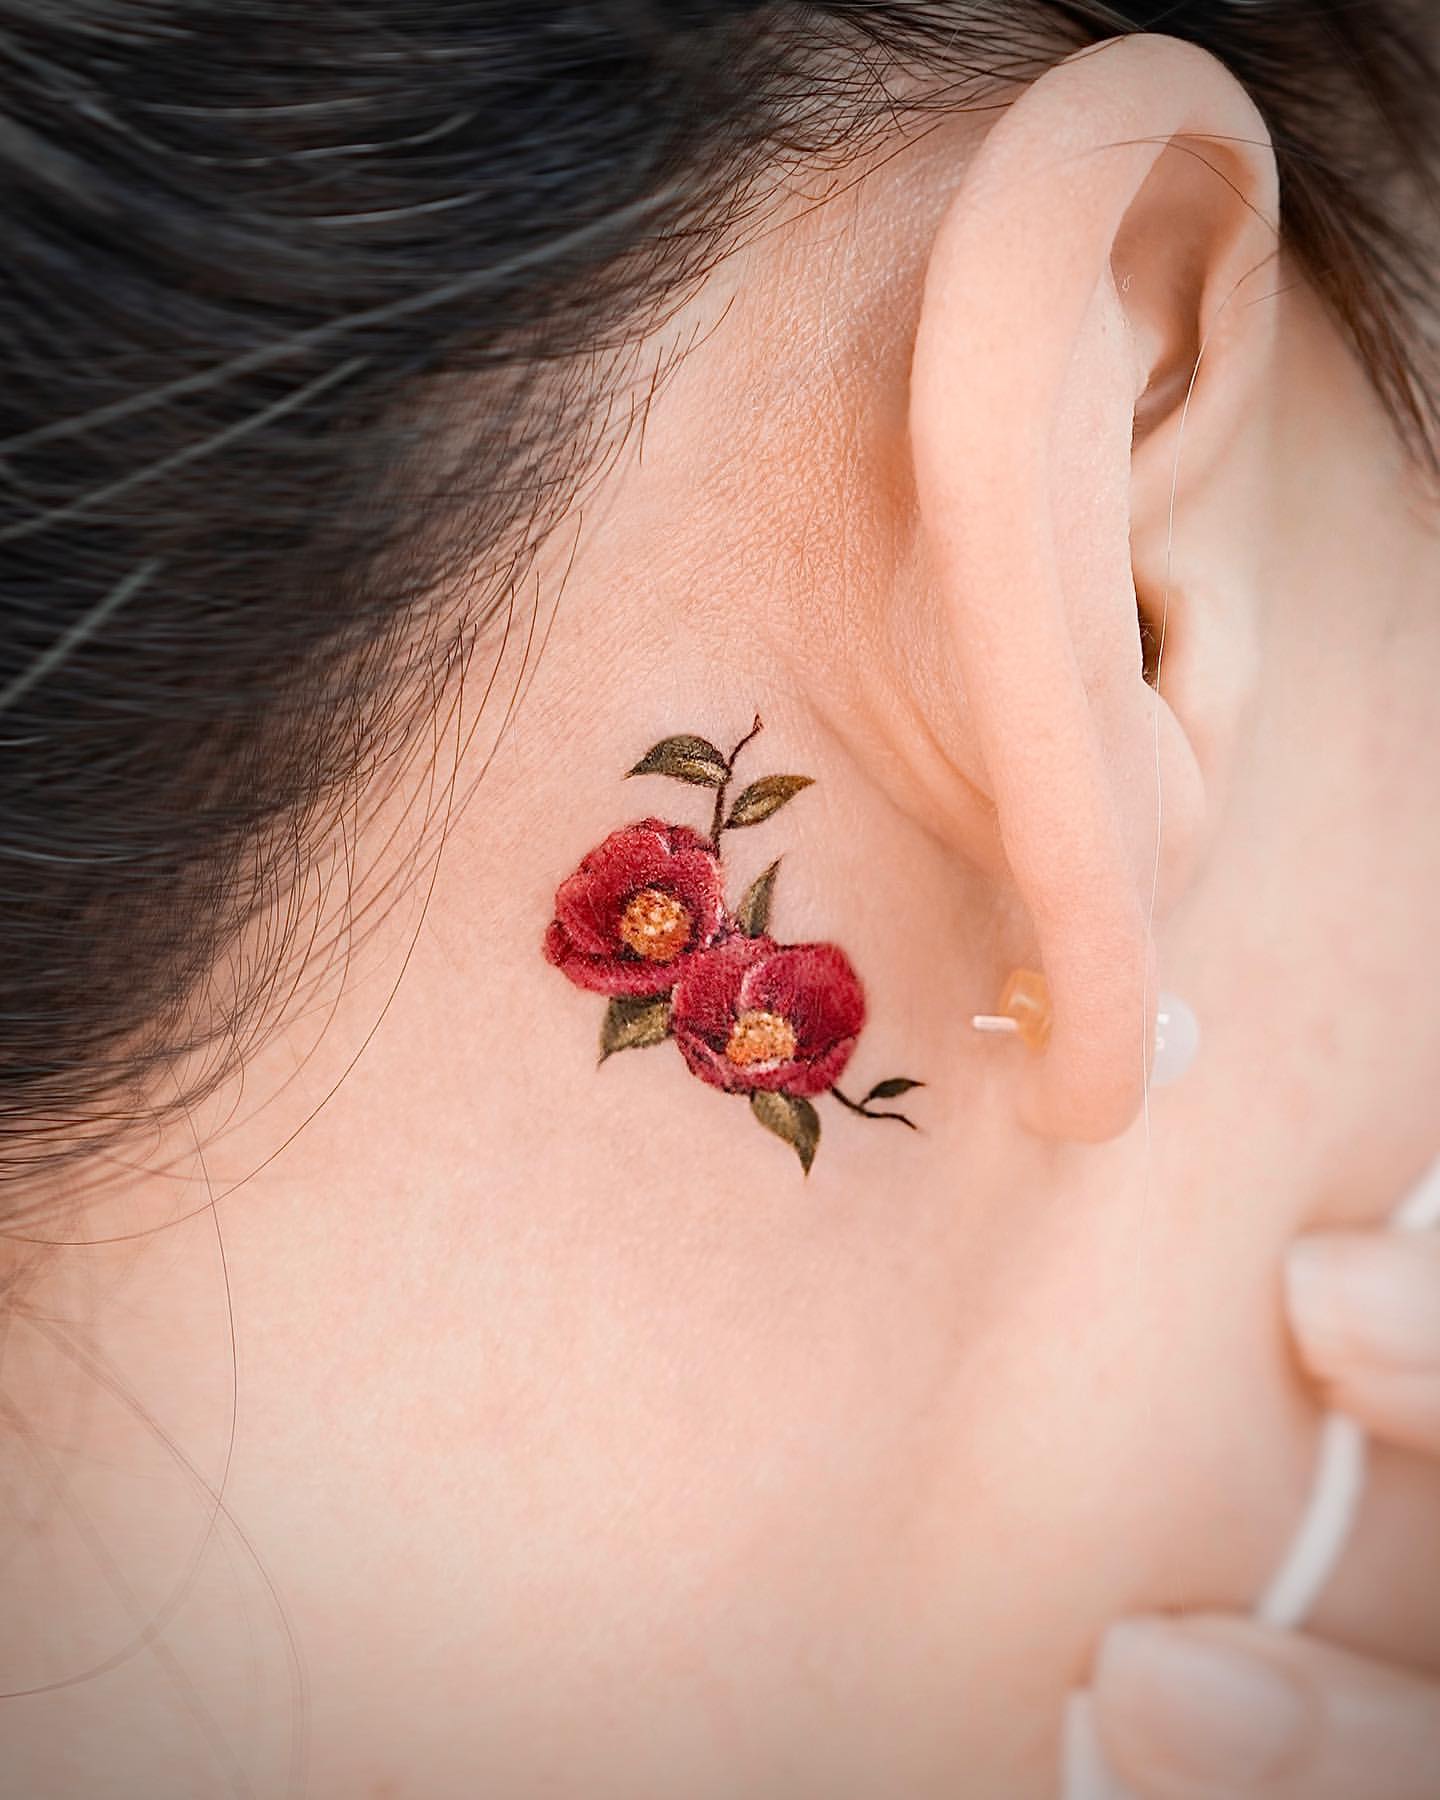 Behind the Ear Tattoos 14